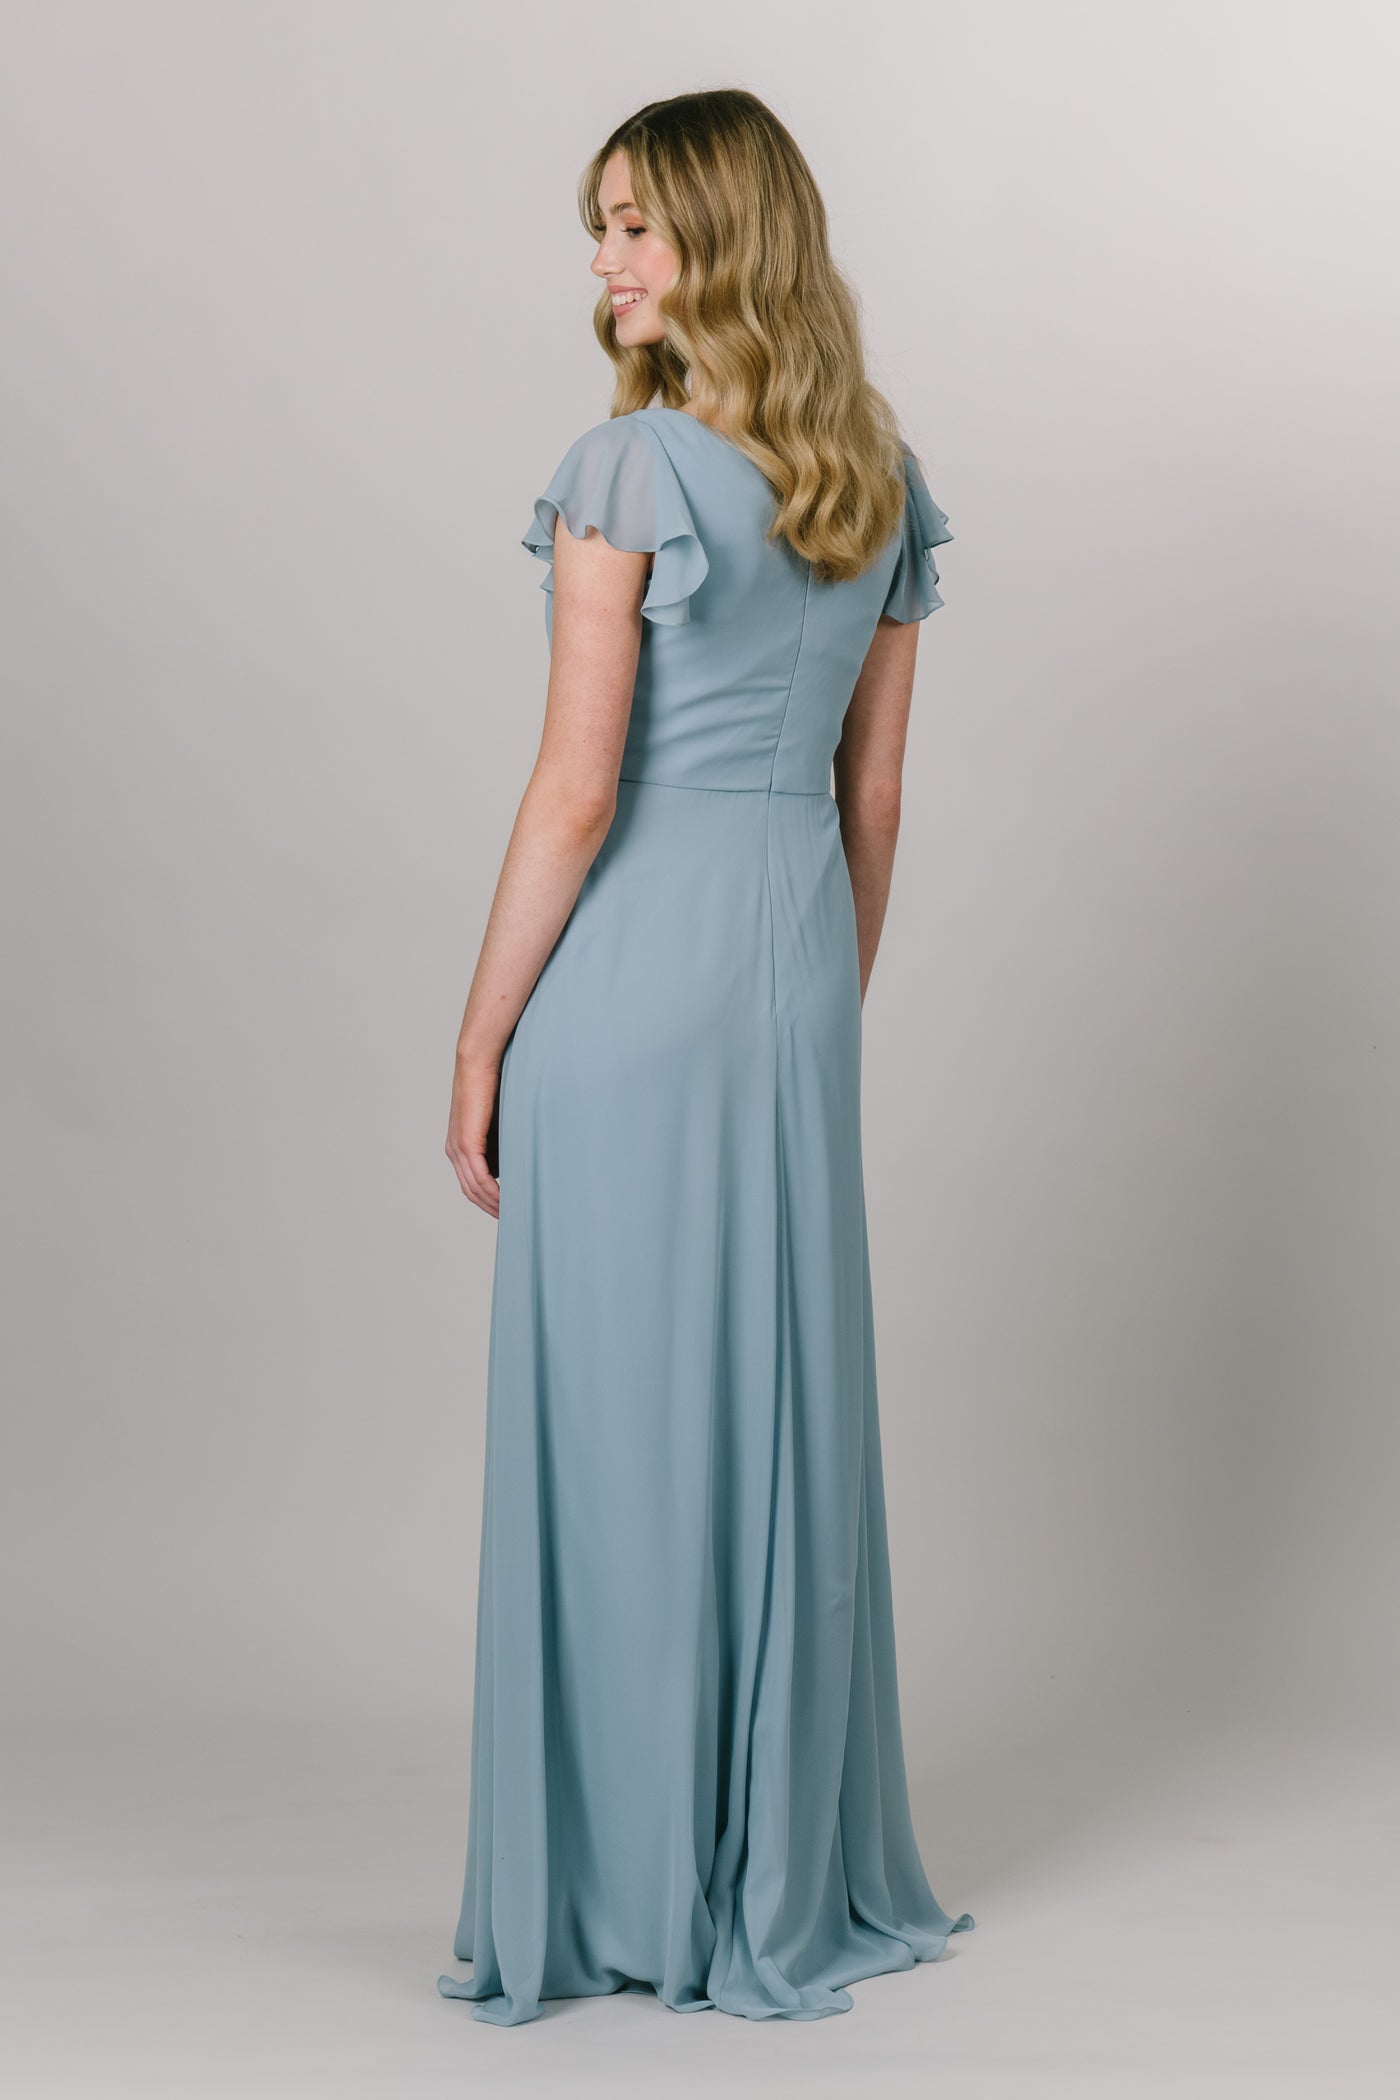 Back view of the blue dress to floor length. Modest Dresses - Modest Prom Dress - Formalwear Modest Dresses - Bridesmaid Modest Dresses. 